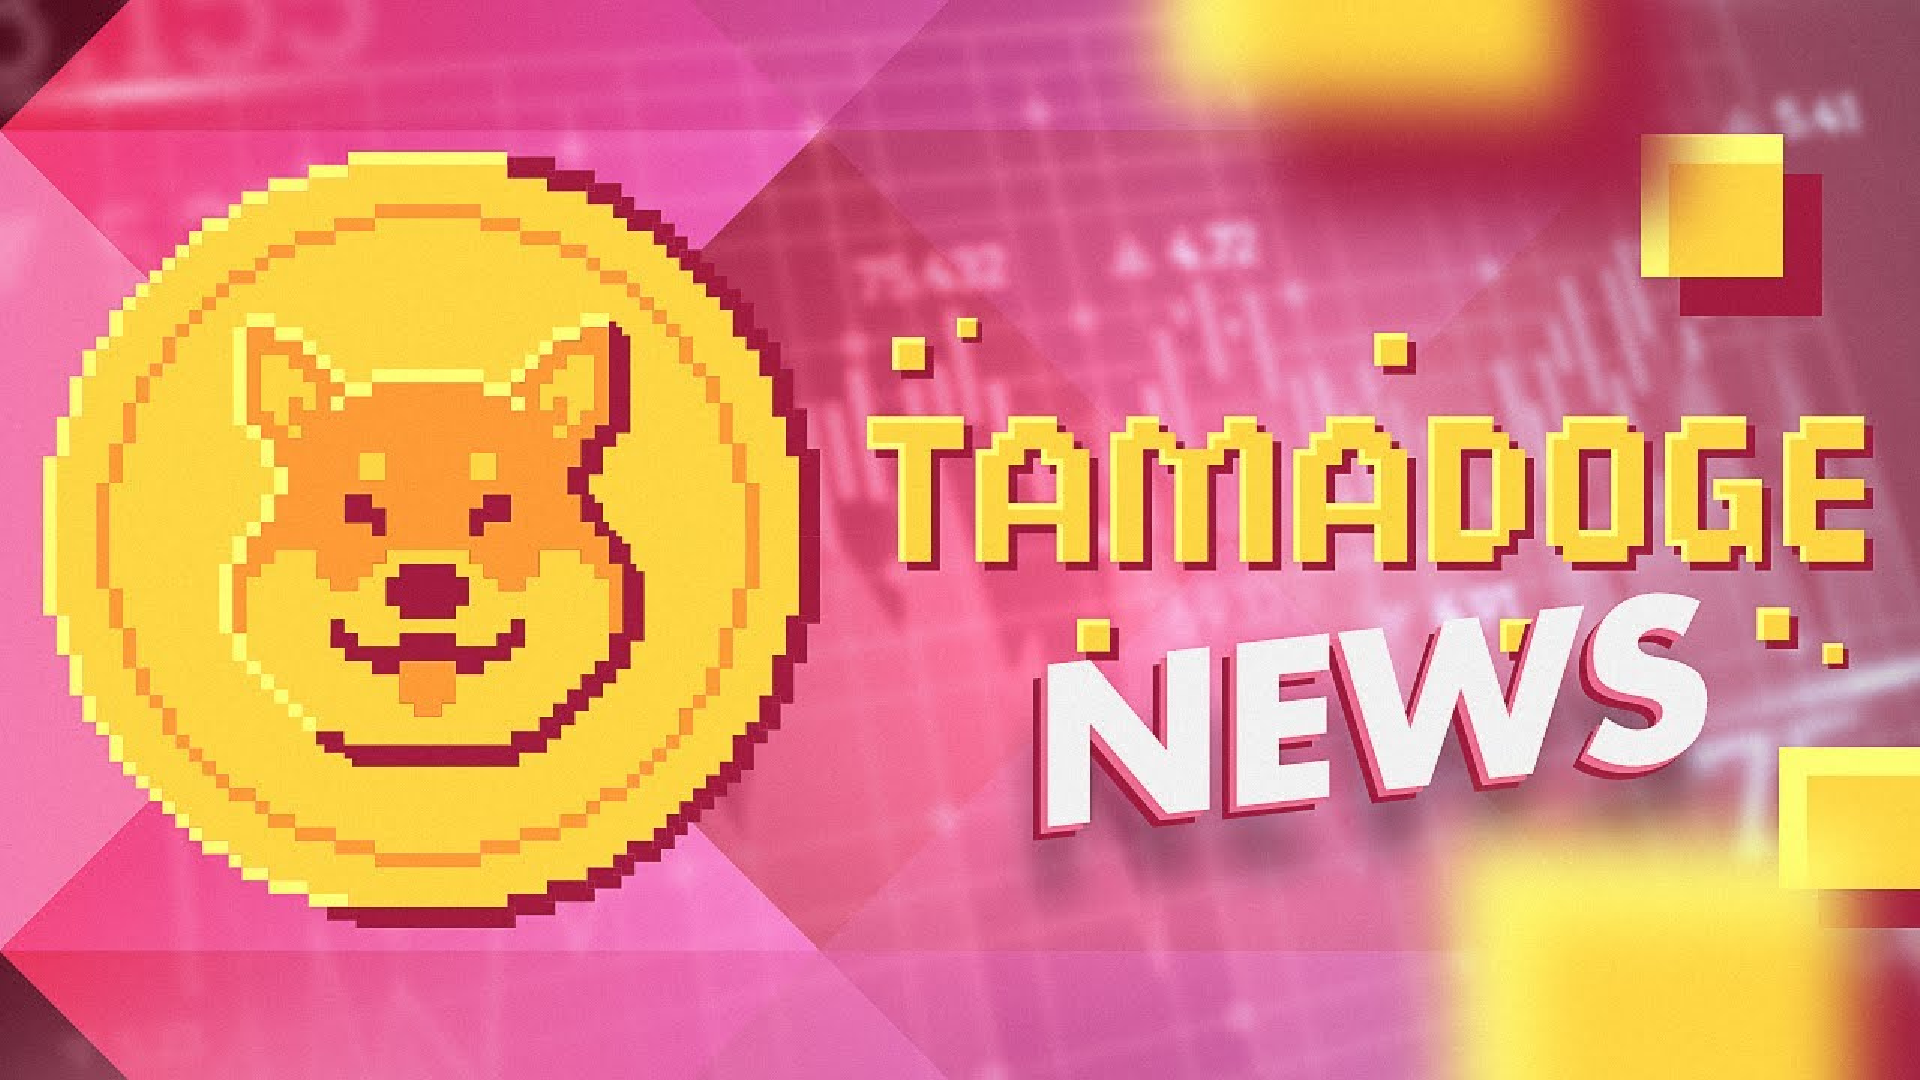 Tamadoge News Update